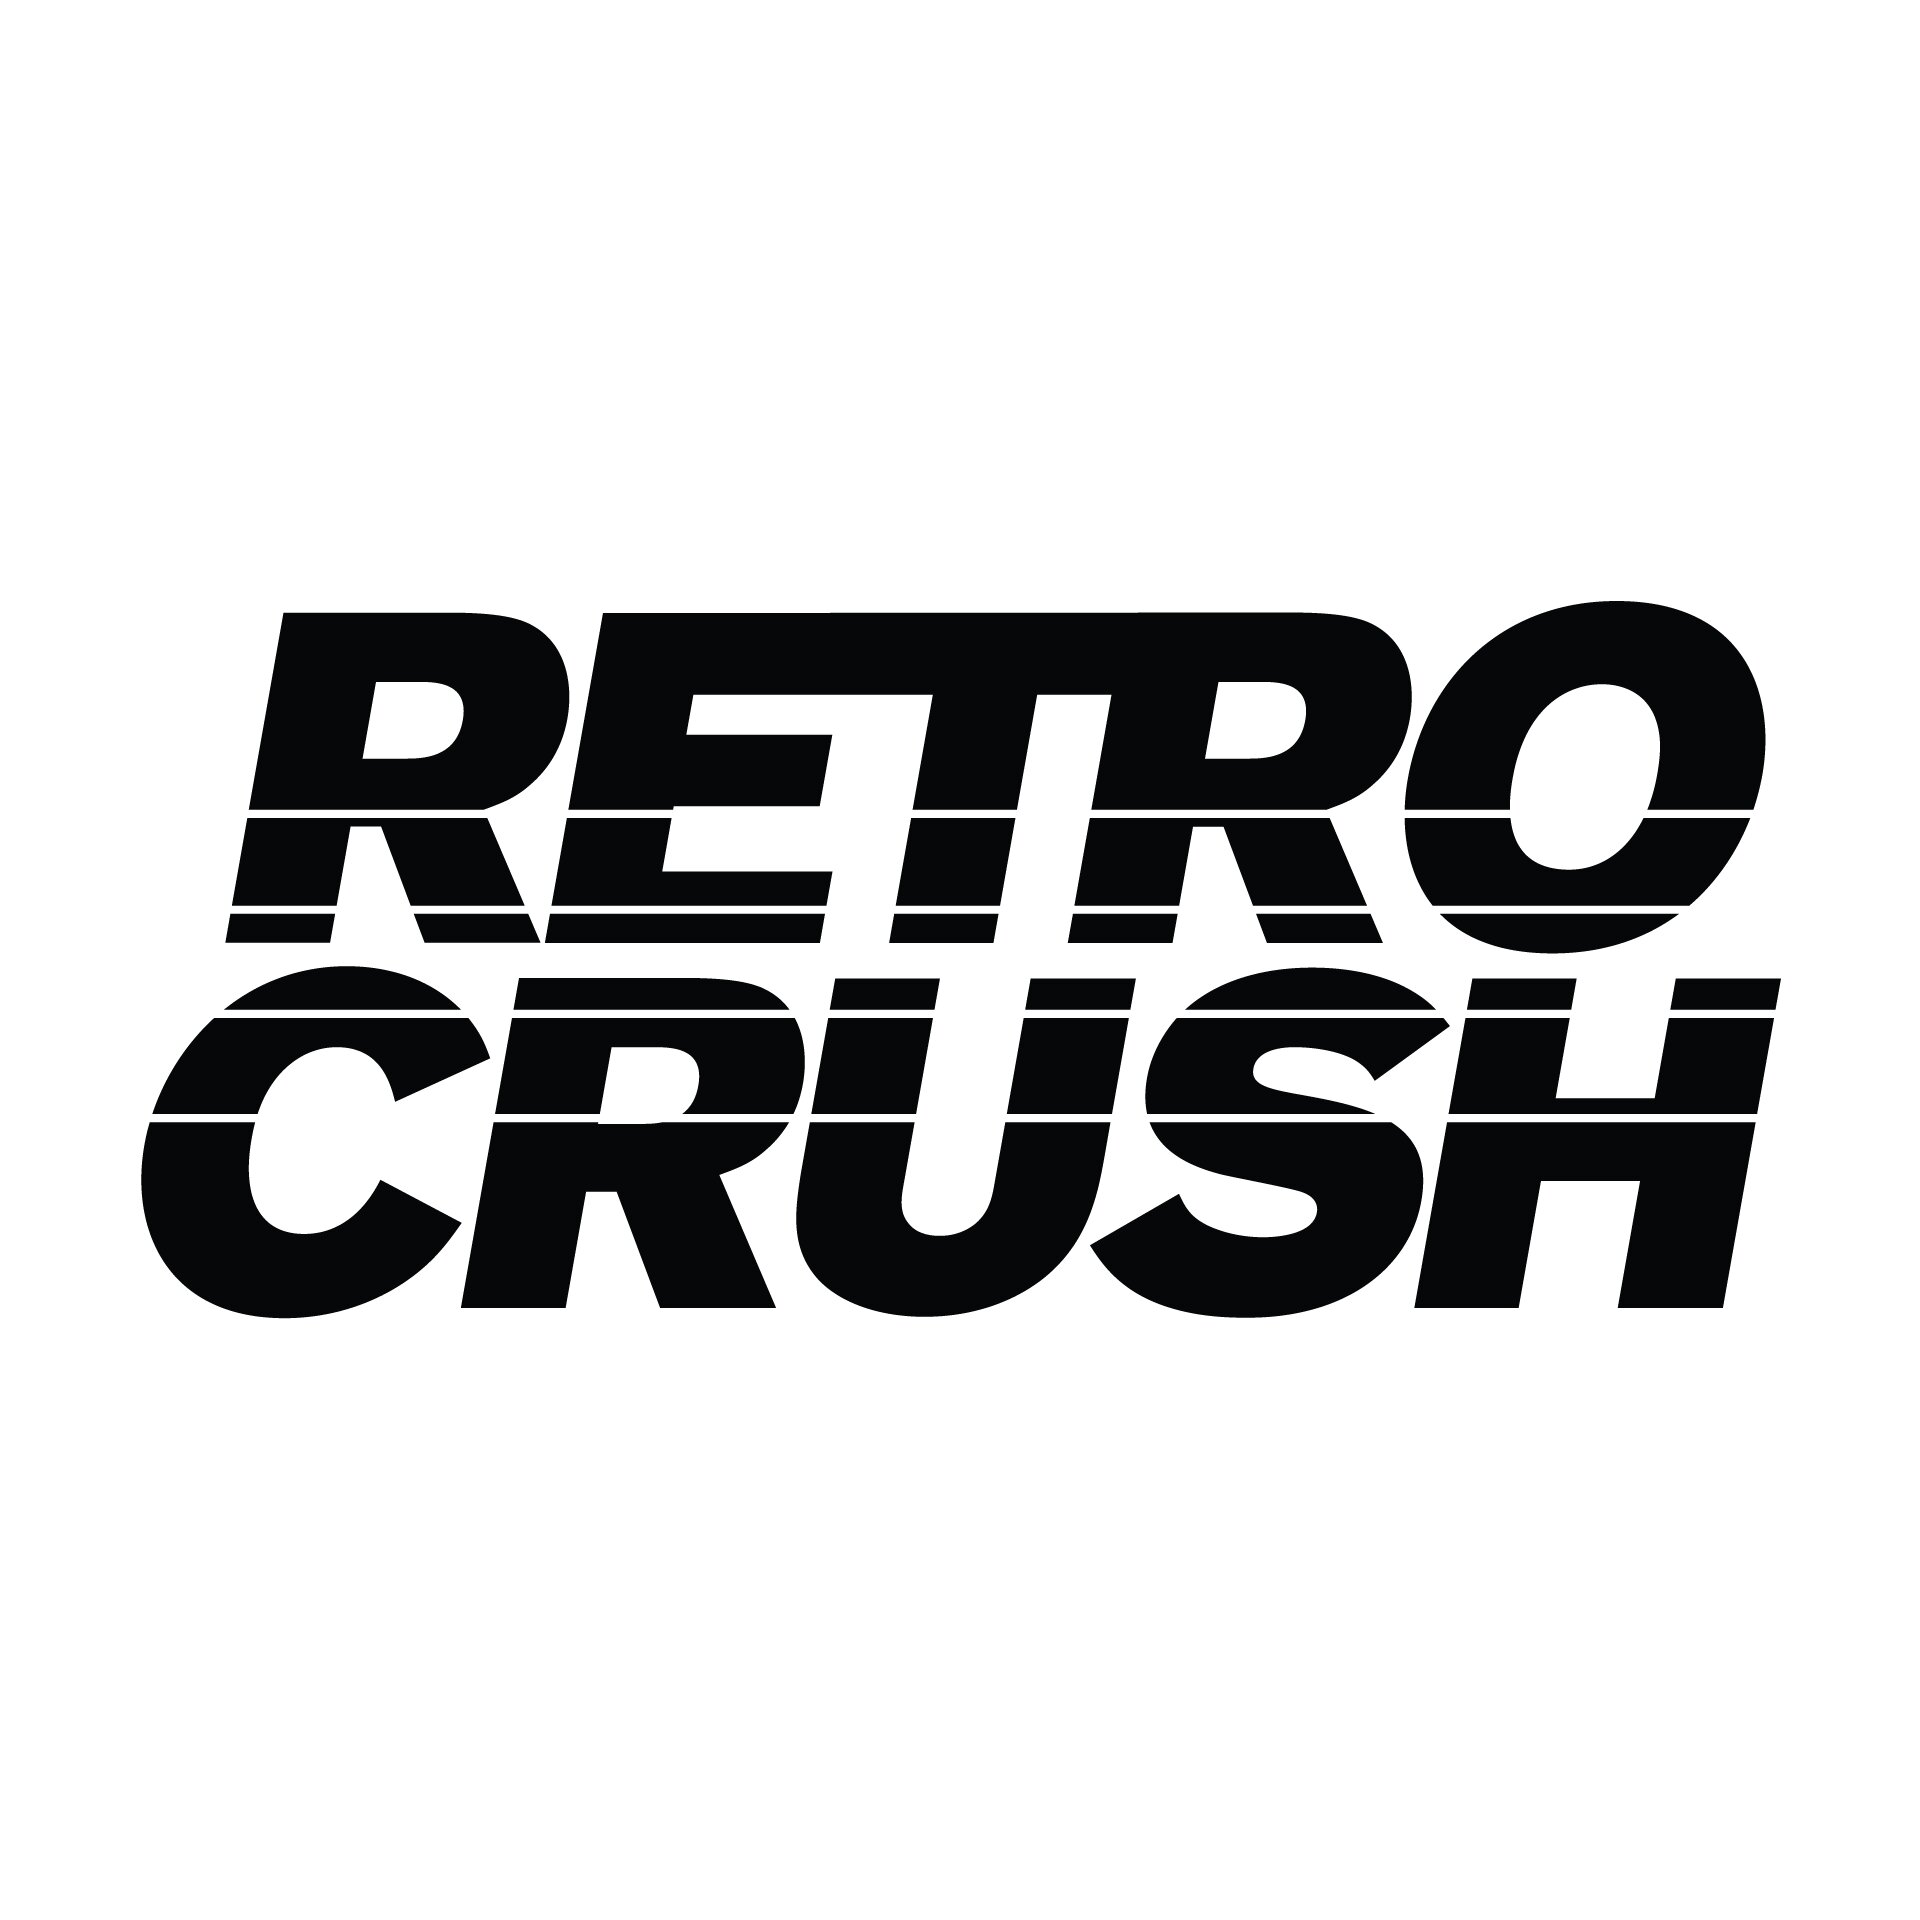 Retro crush logo